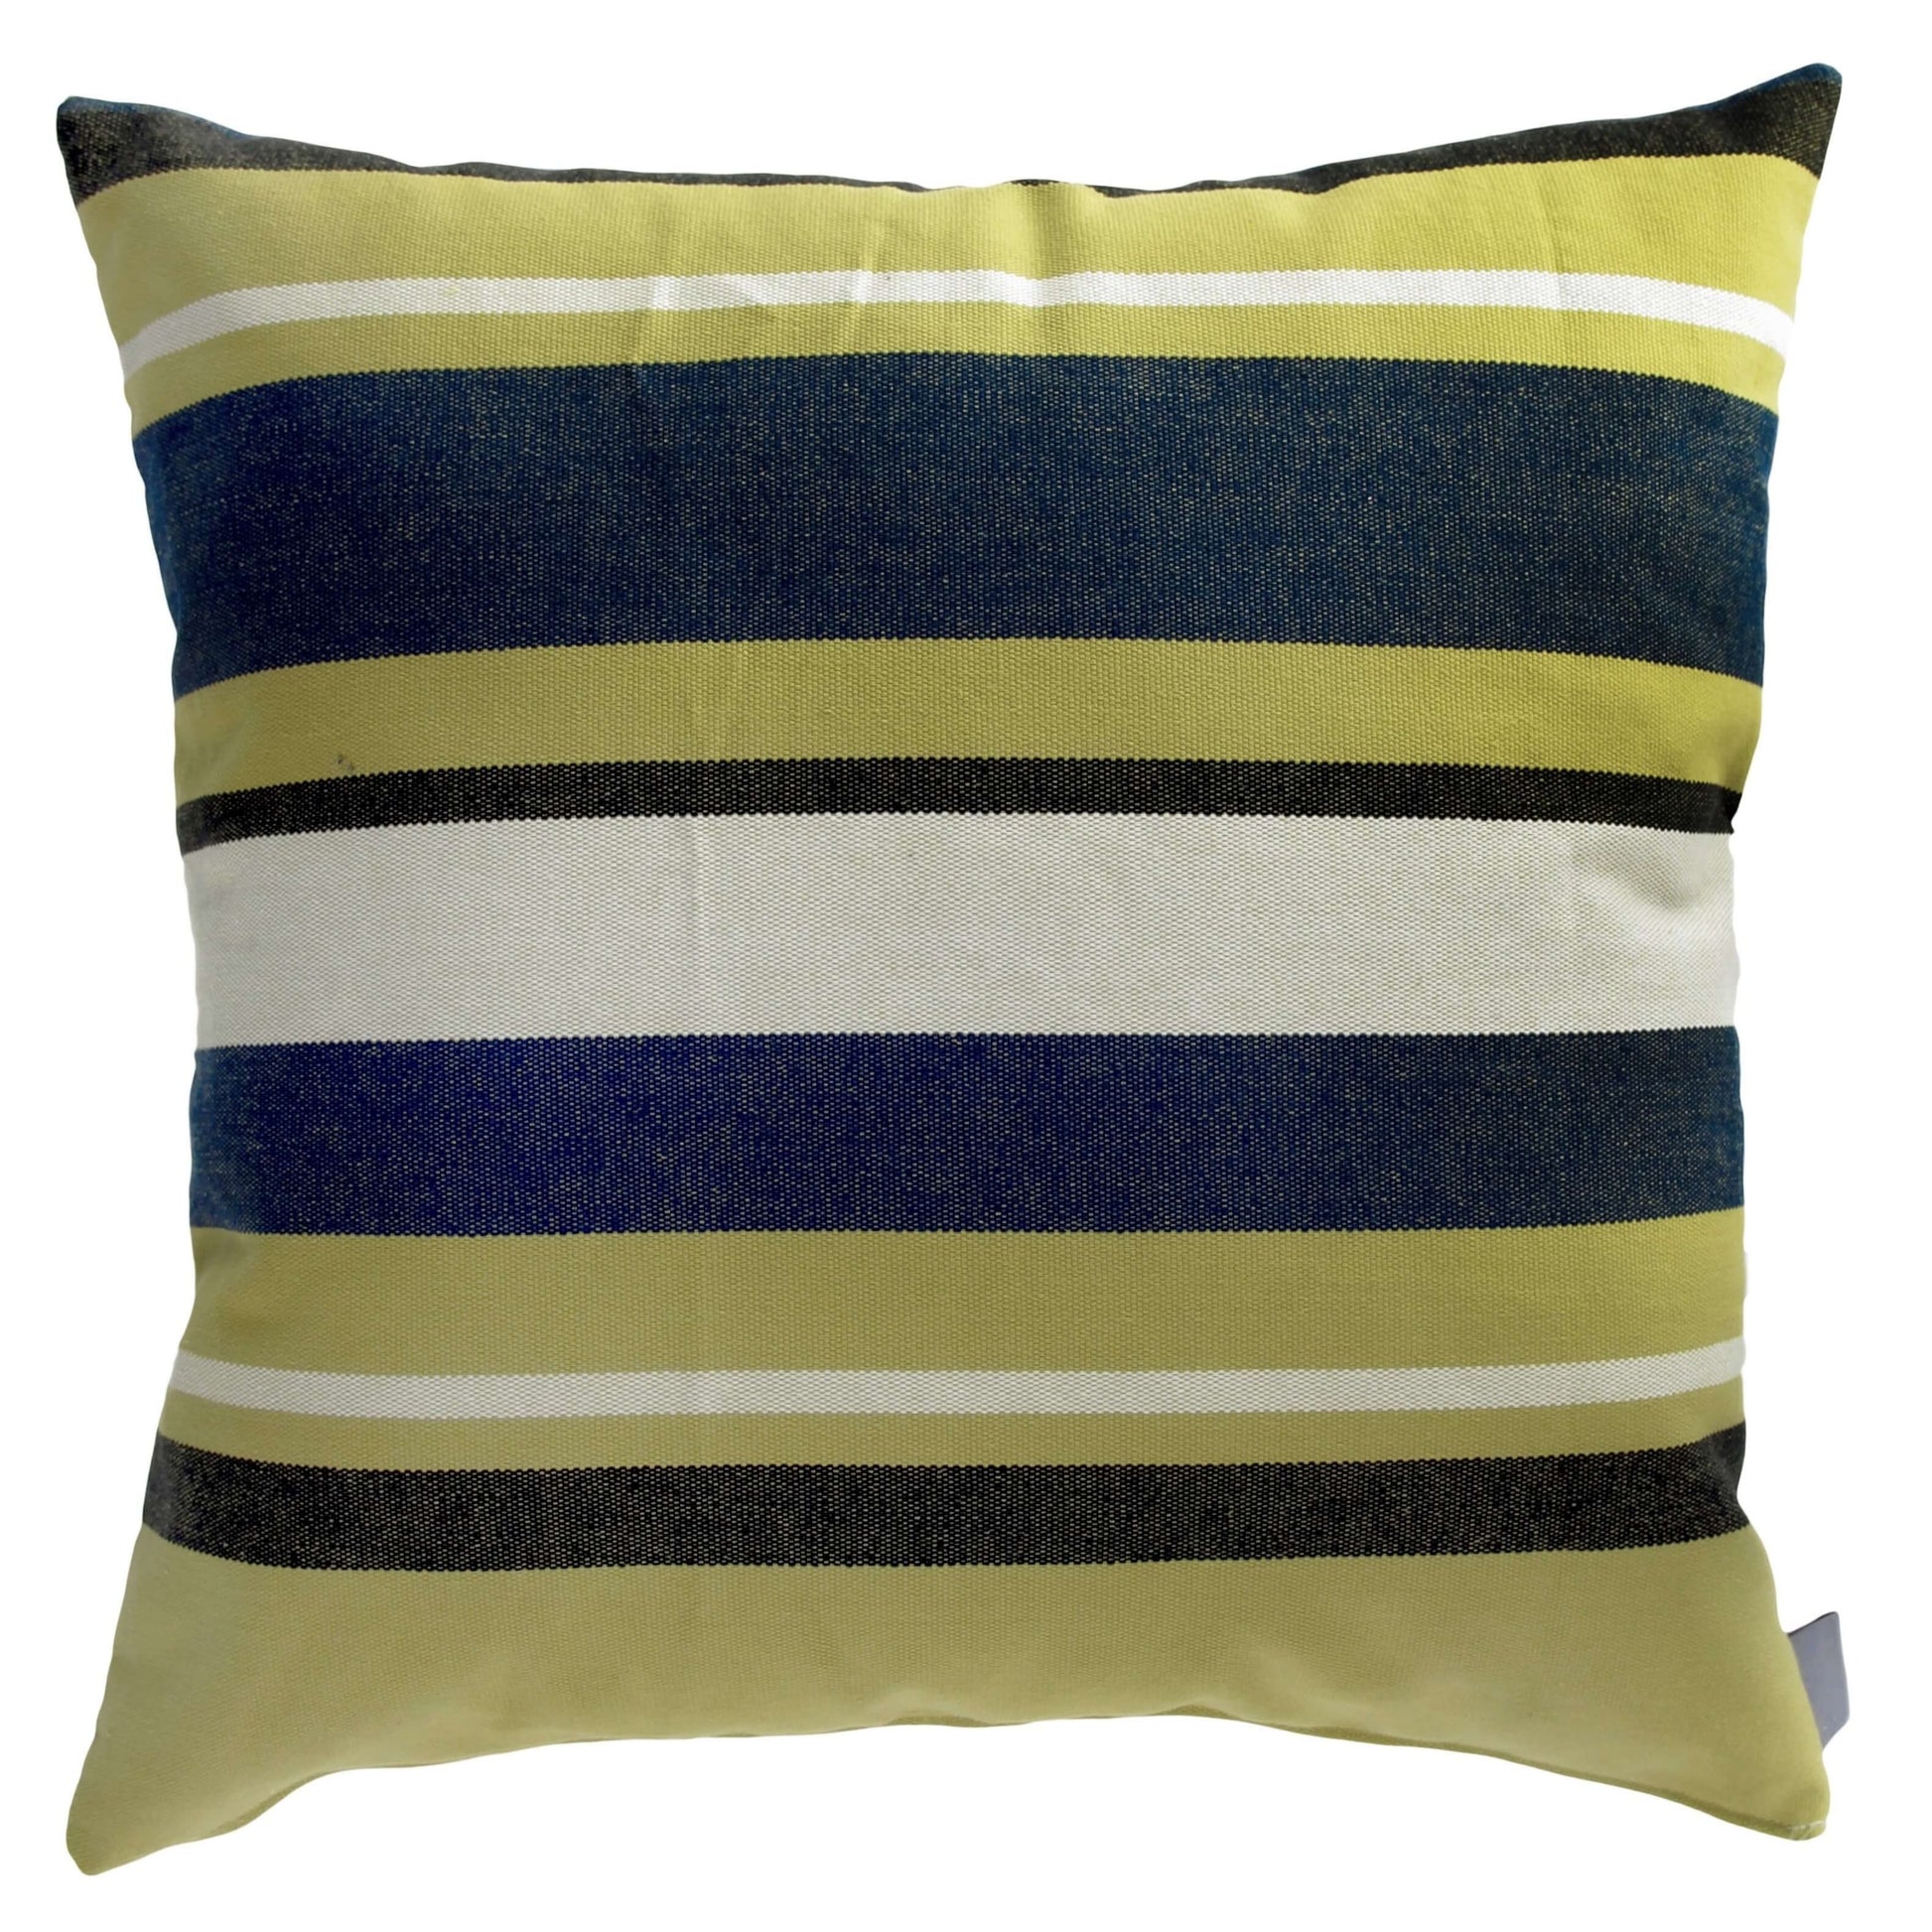 Georgia Tech Colors Striped Pillow Cover